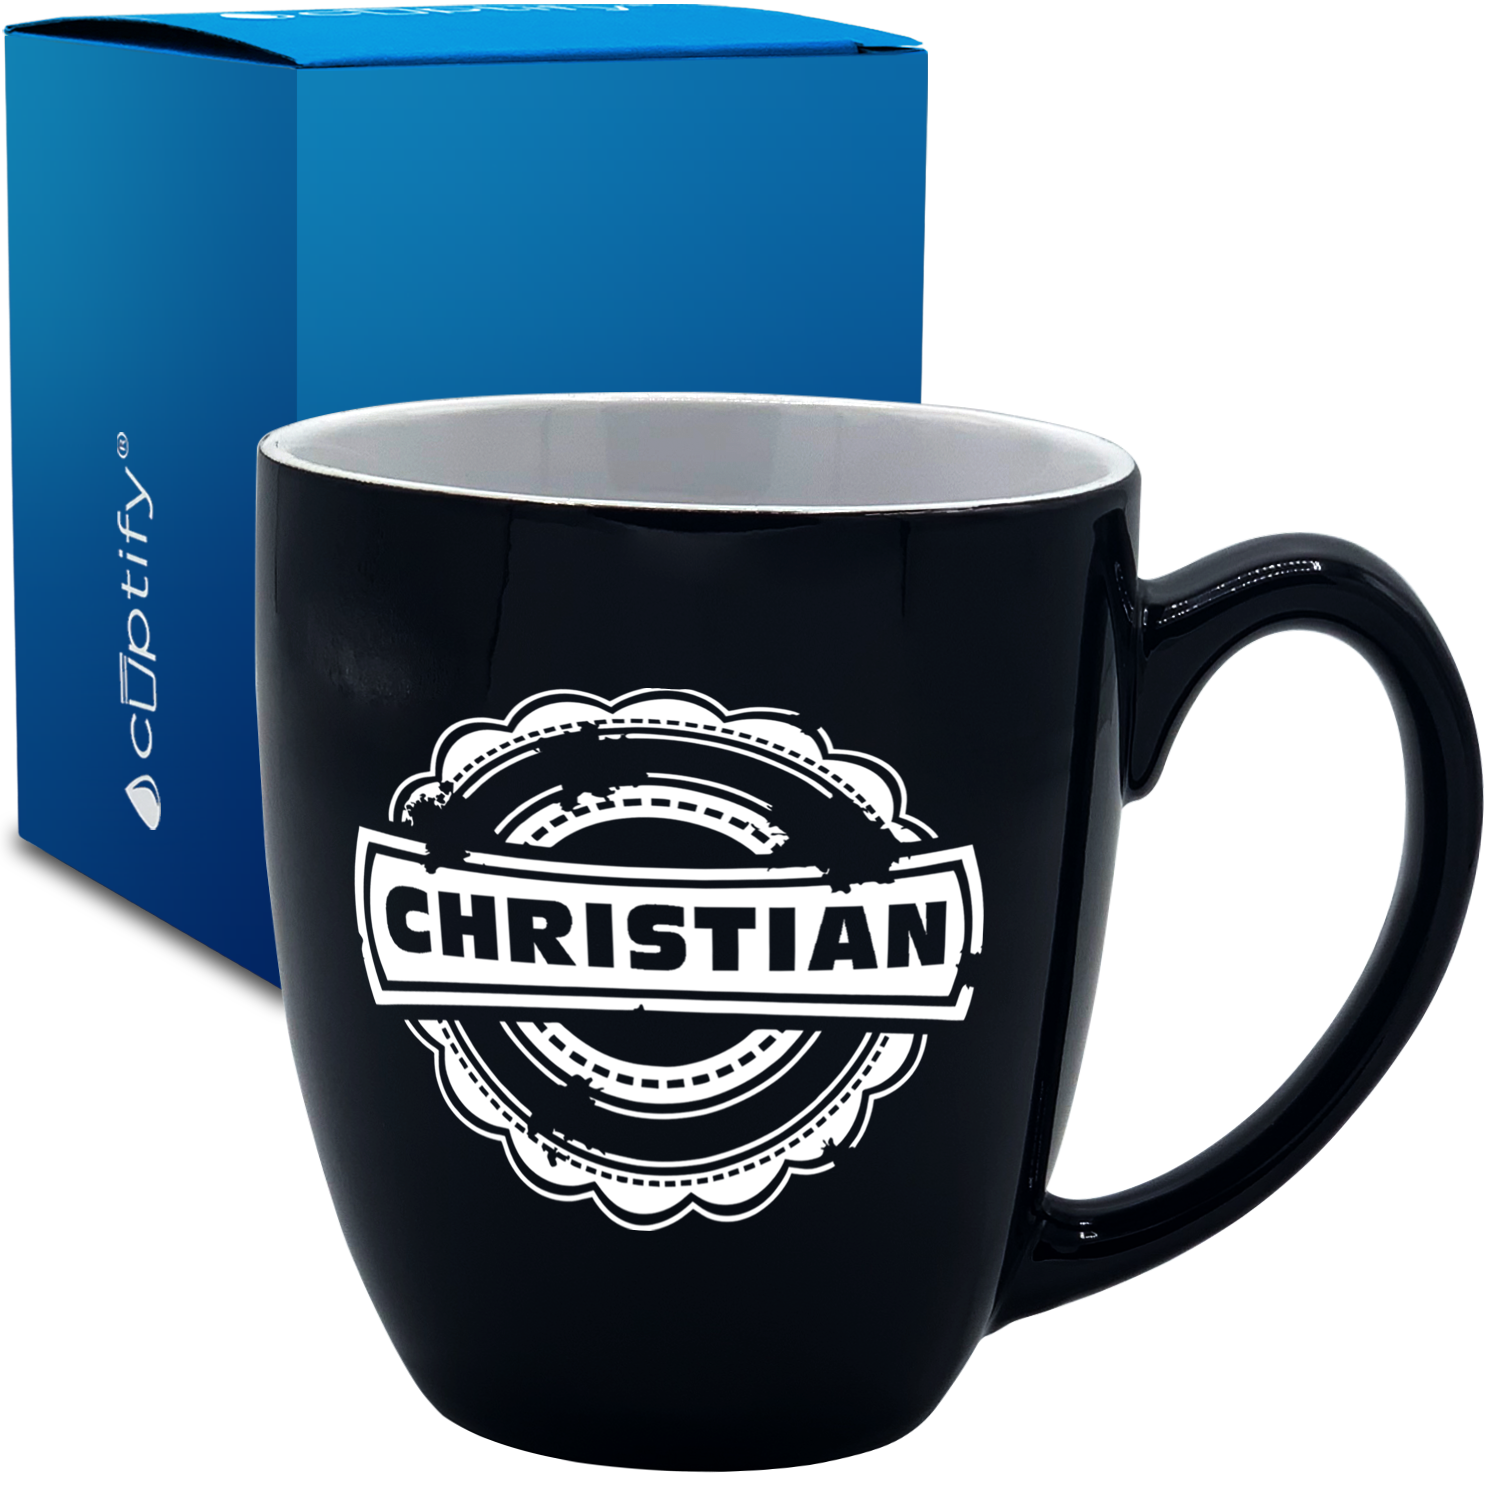 Personalized Asperous 16oz Bistro Coffee Mug